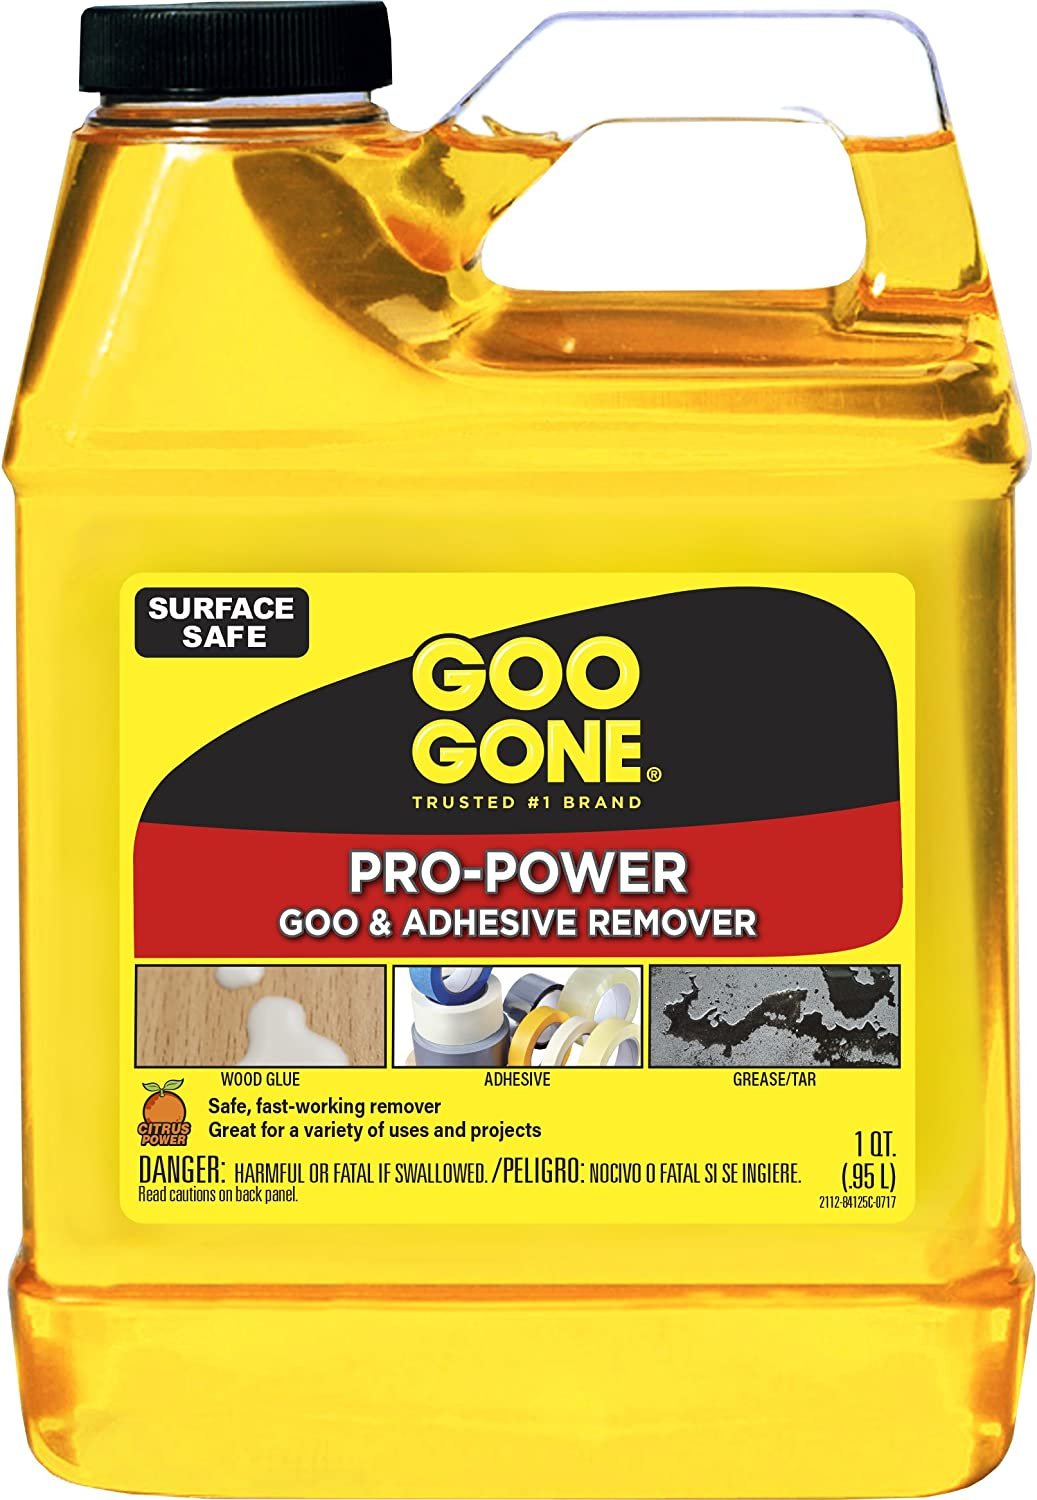 Goo Gone Adhesive Remover.jpg